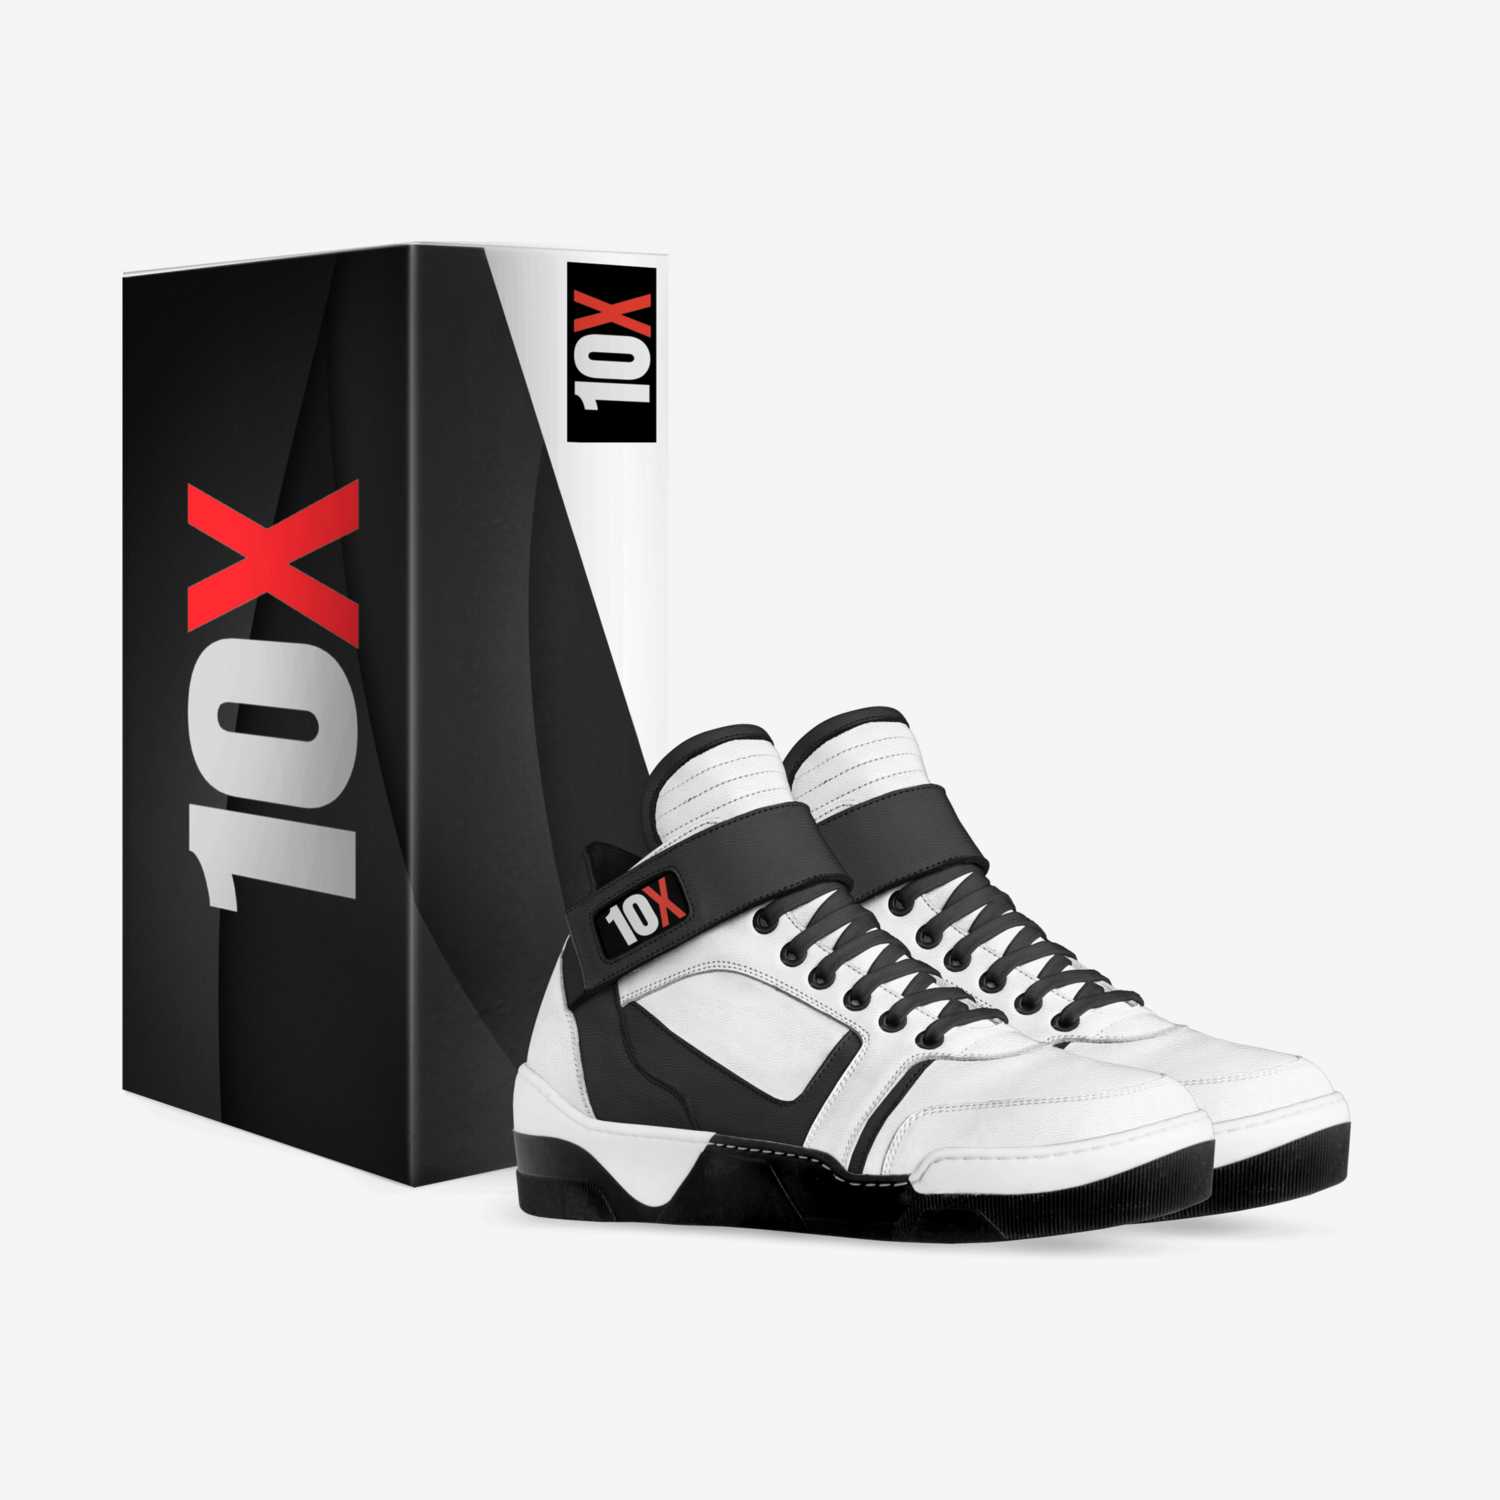 10X custom made in Italy shoes by Eduardo Ramirez | Box view